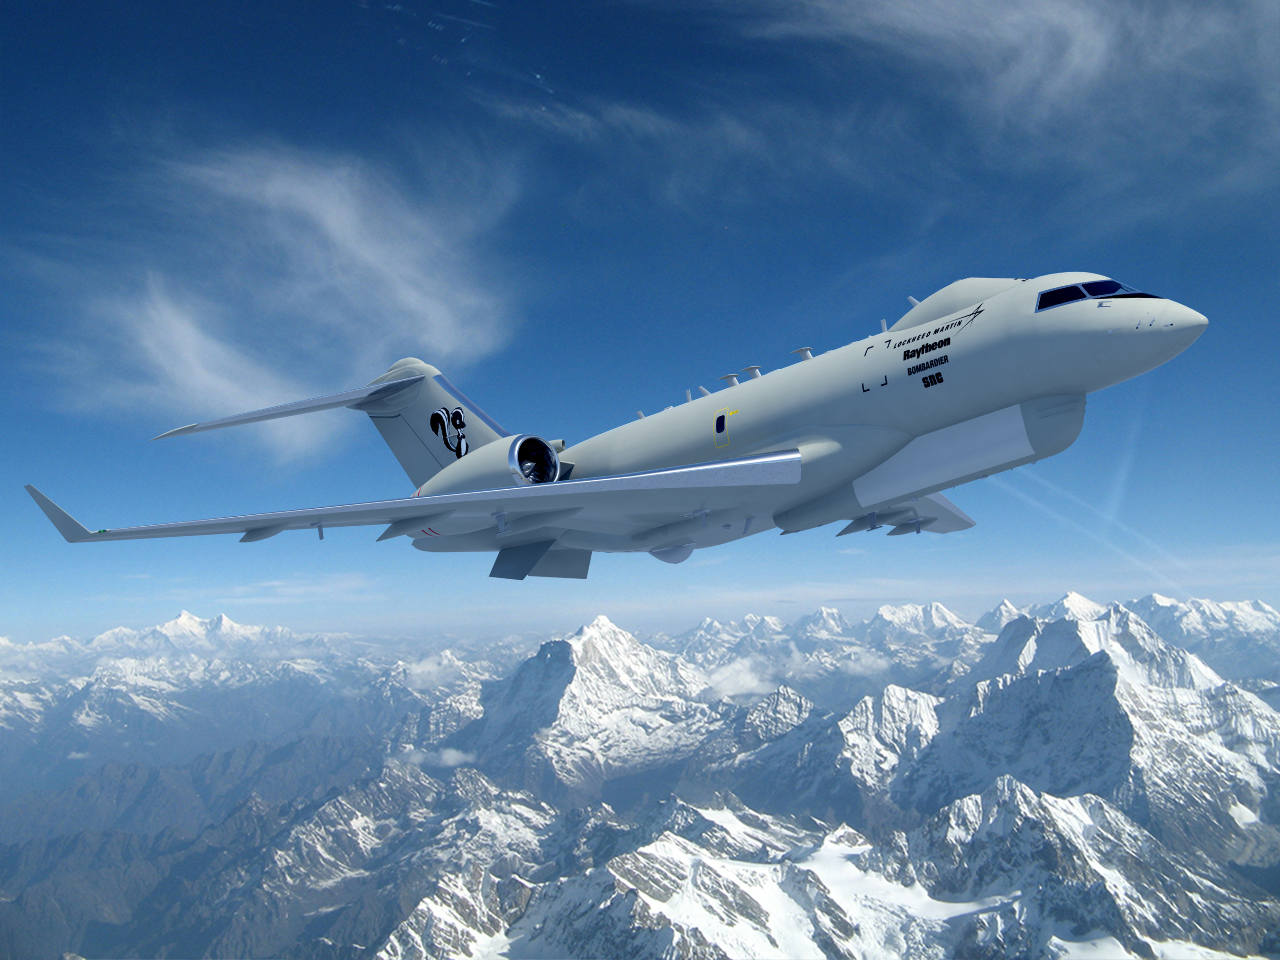 Remplacement des E-8 JSTARS : Sierra Nevada rejoint Lockheed Martin